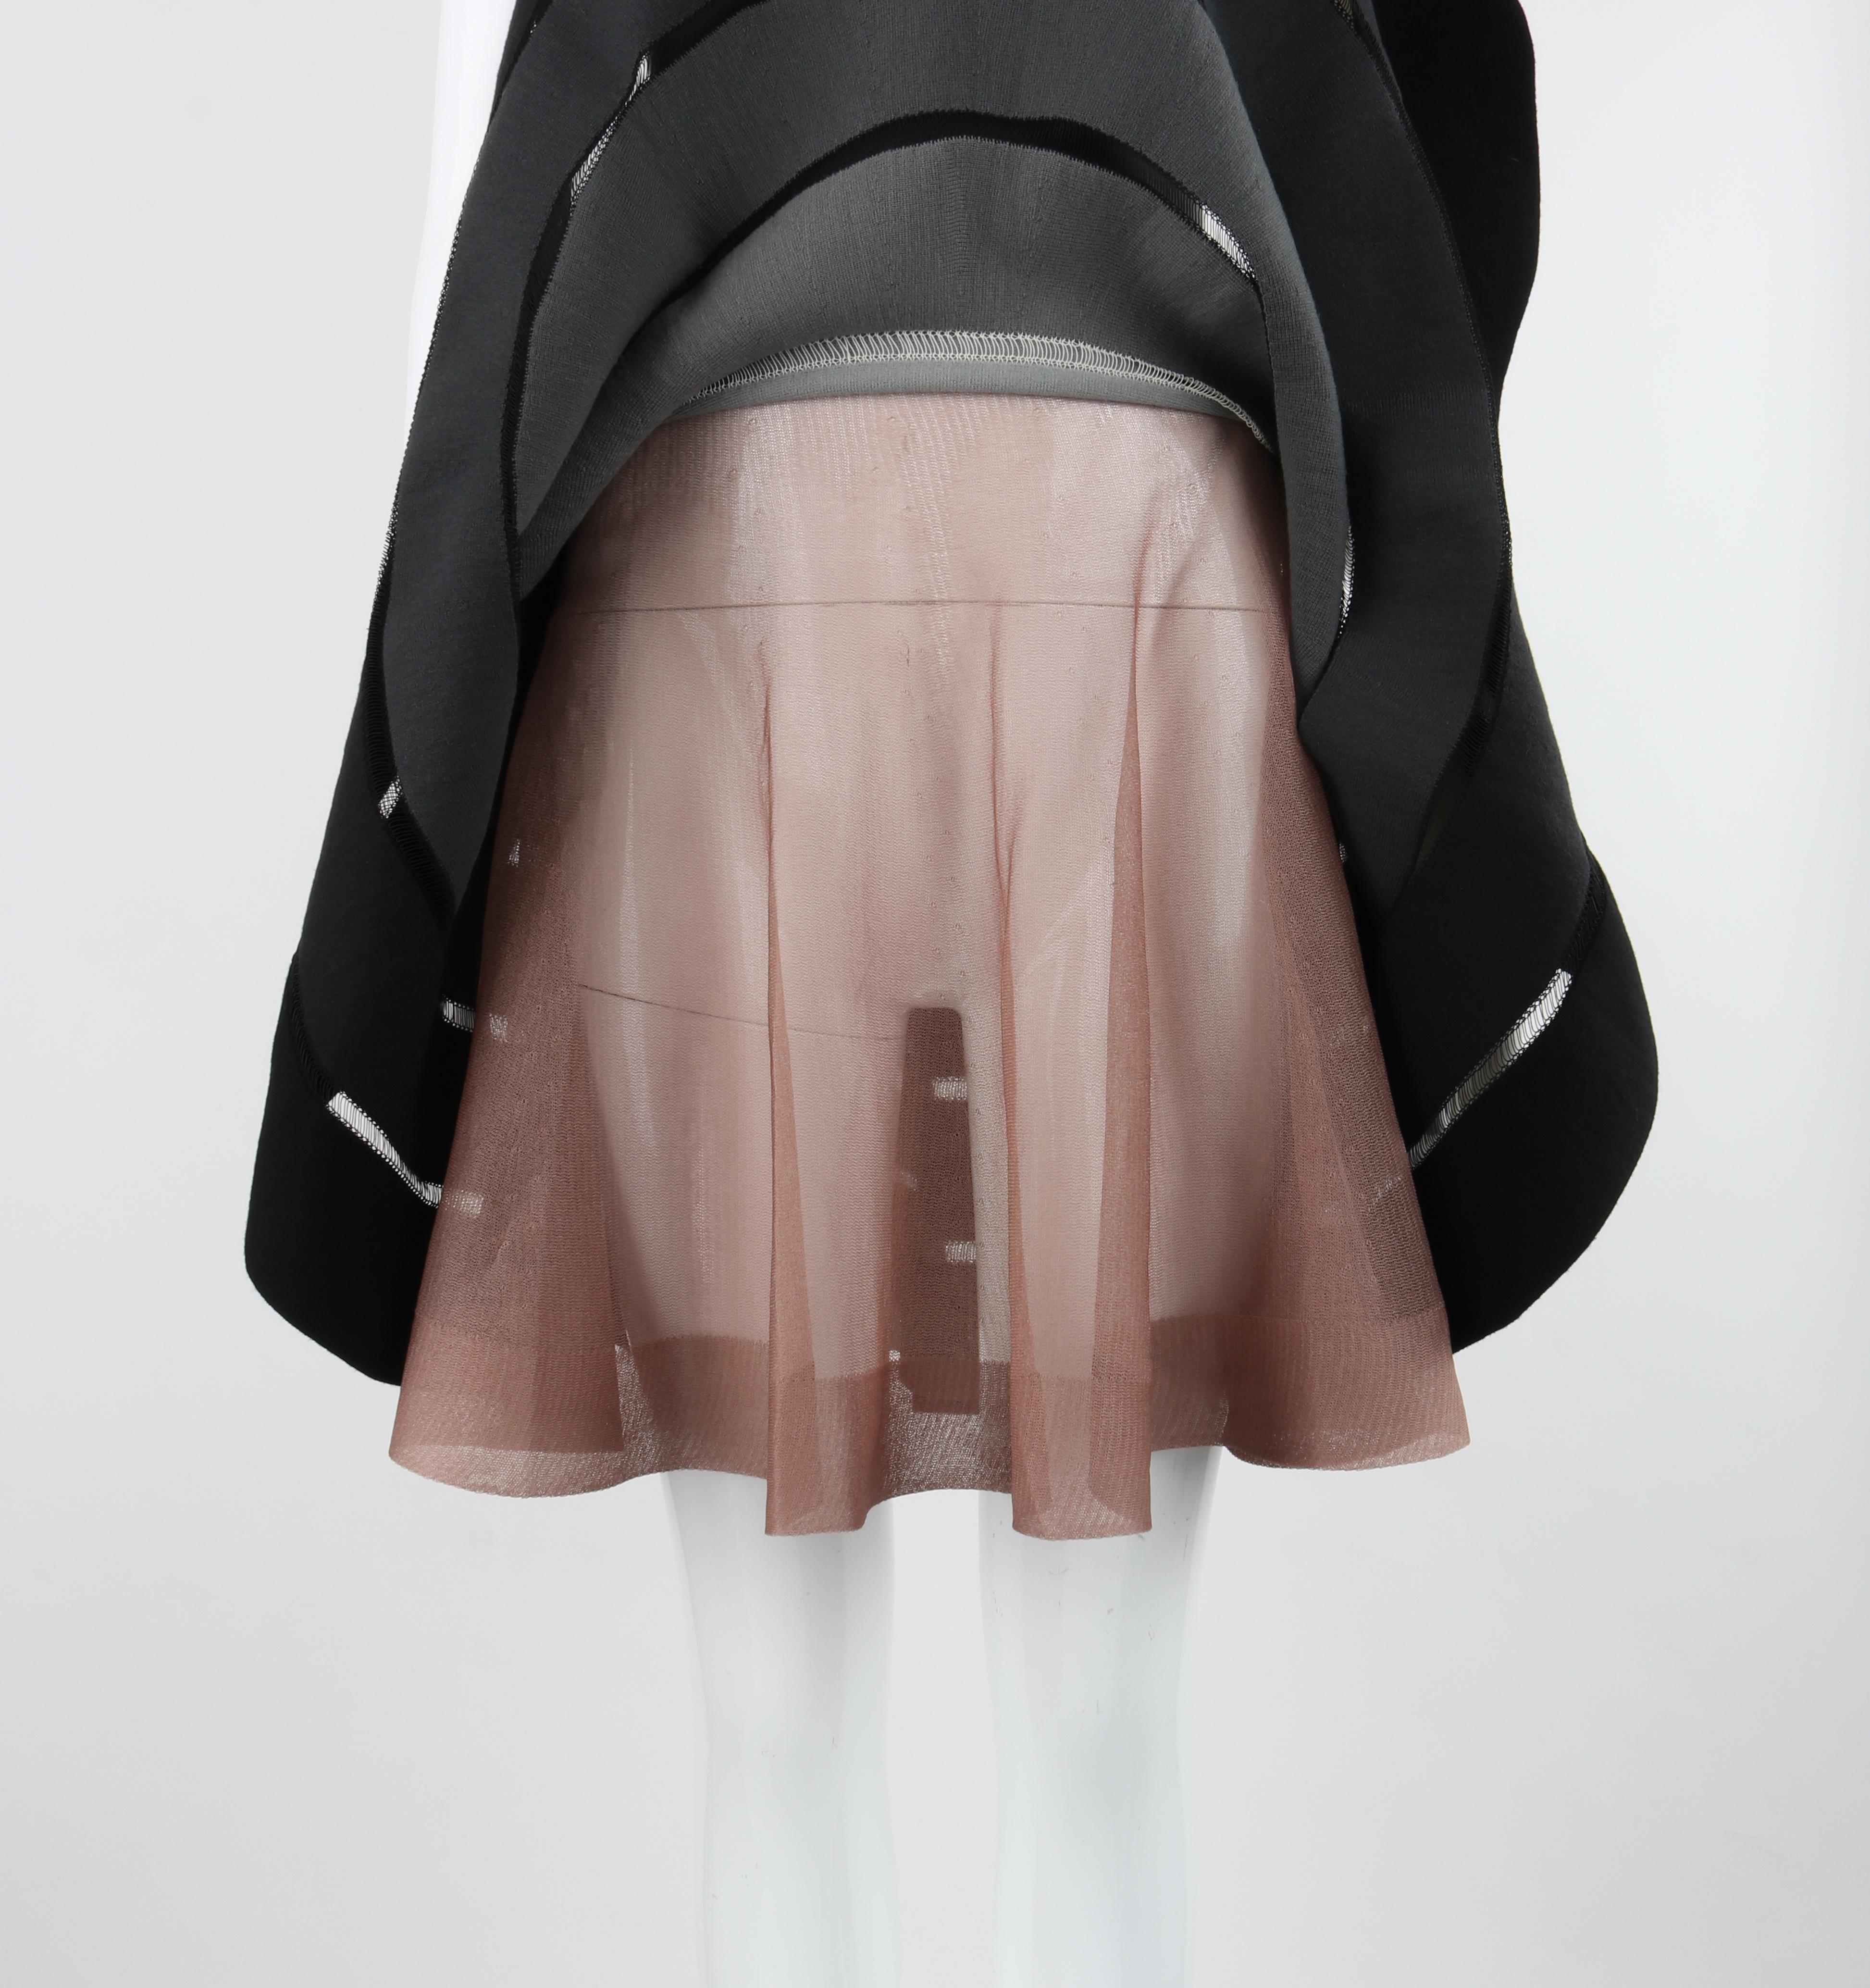 ALAIA PARIS c. 2010 Monochrome Ombre Wool Silk Fit & Flare Skater Mini Dress For Sale 5